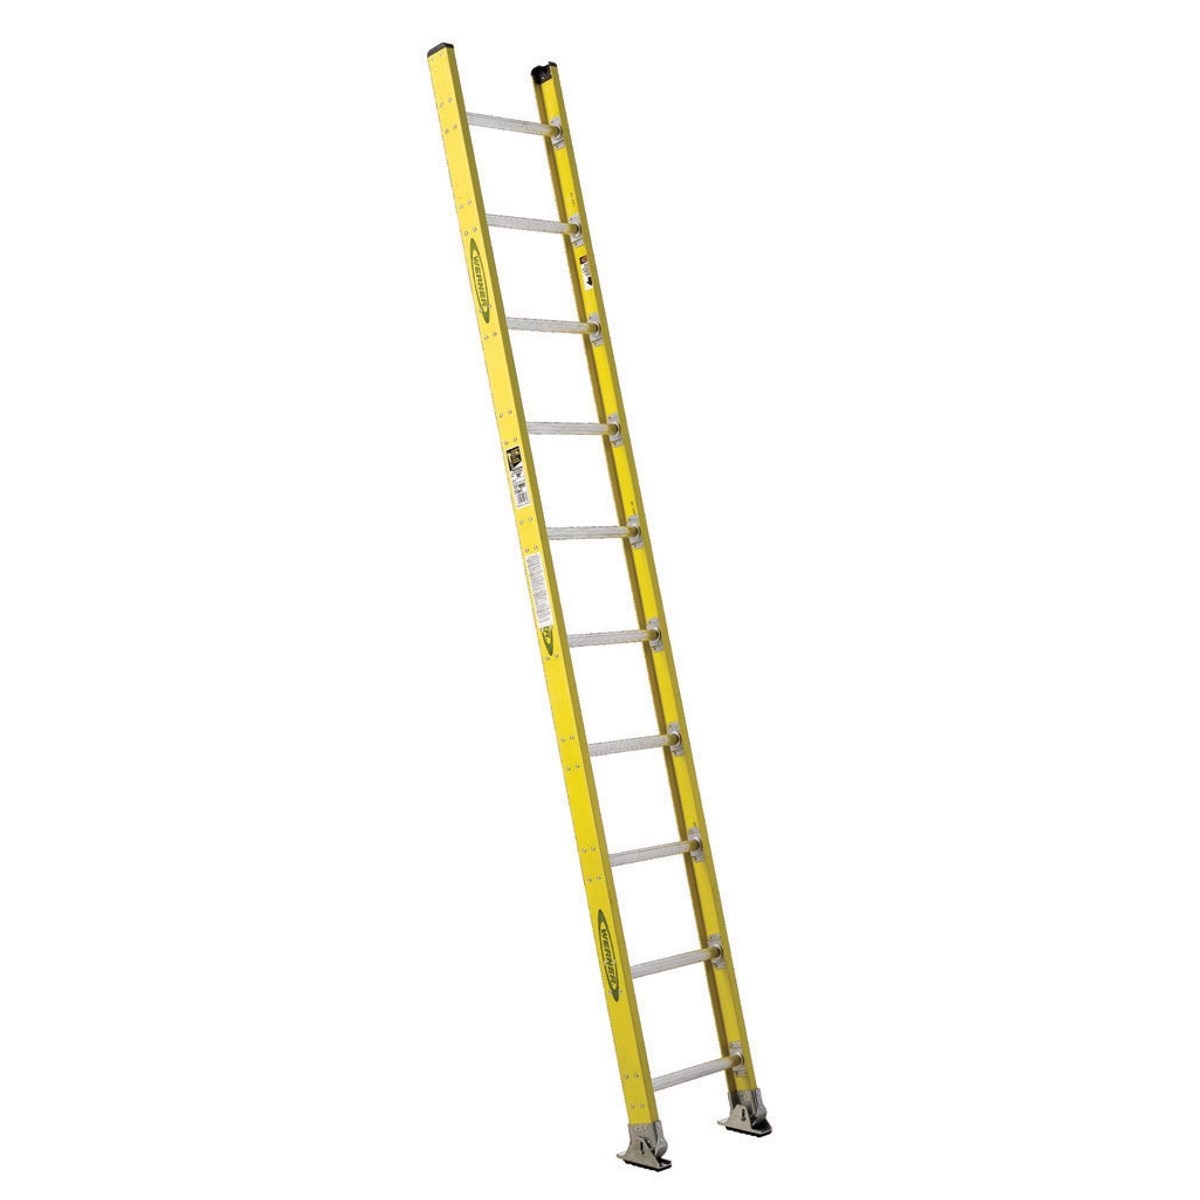 Fiberglass Podium Ladder - 11' Overall Height H-7017 - Uline